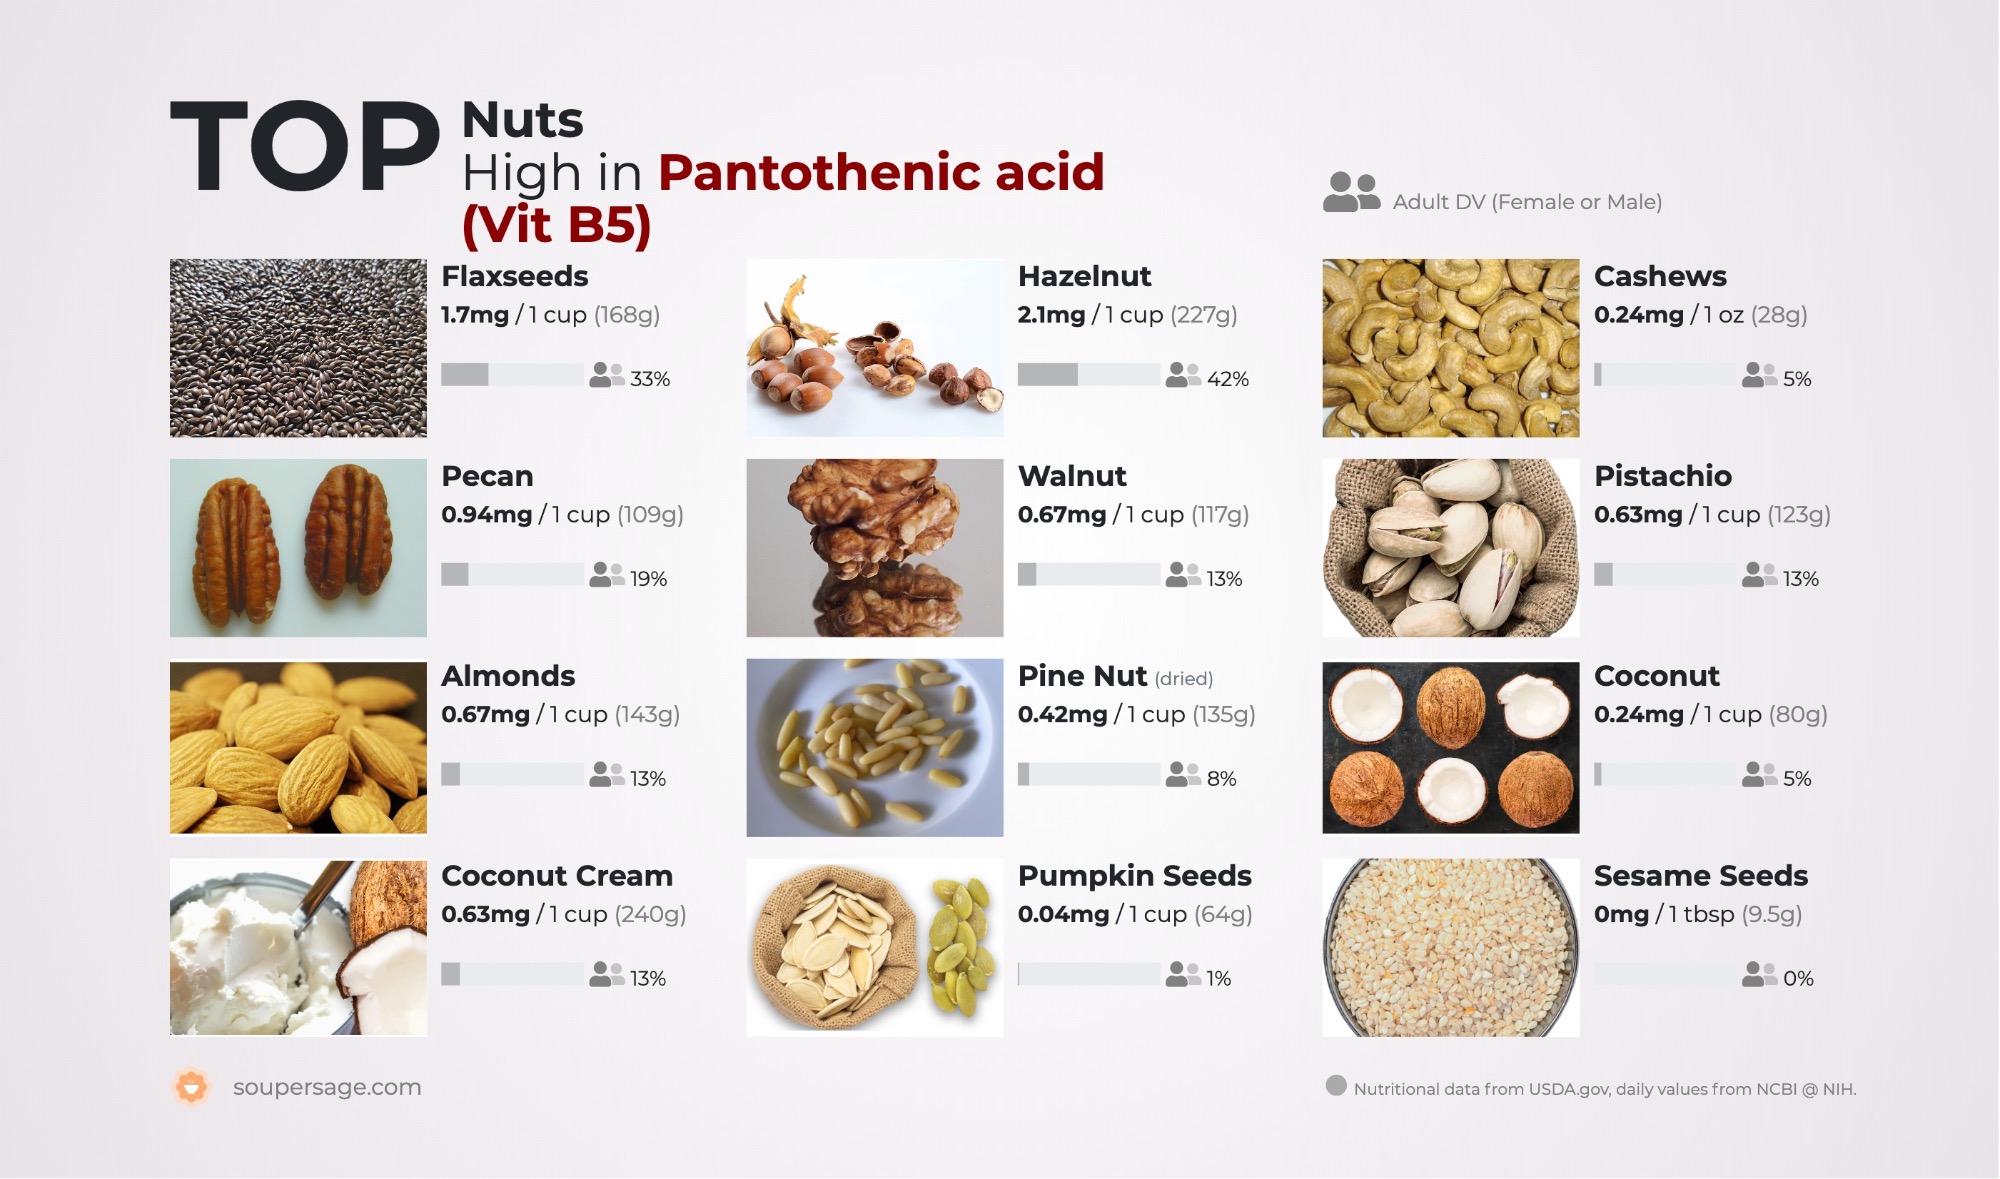 image of Top Nuts High in Pantothenic acid (Vit B5)